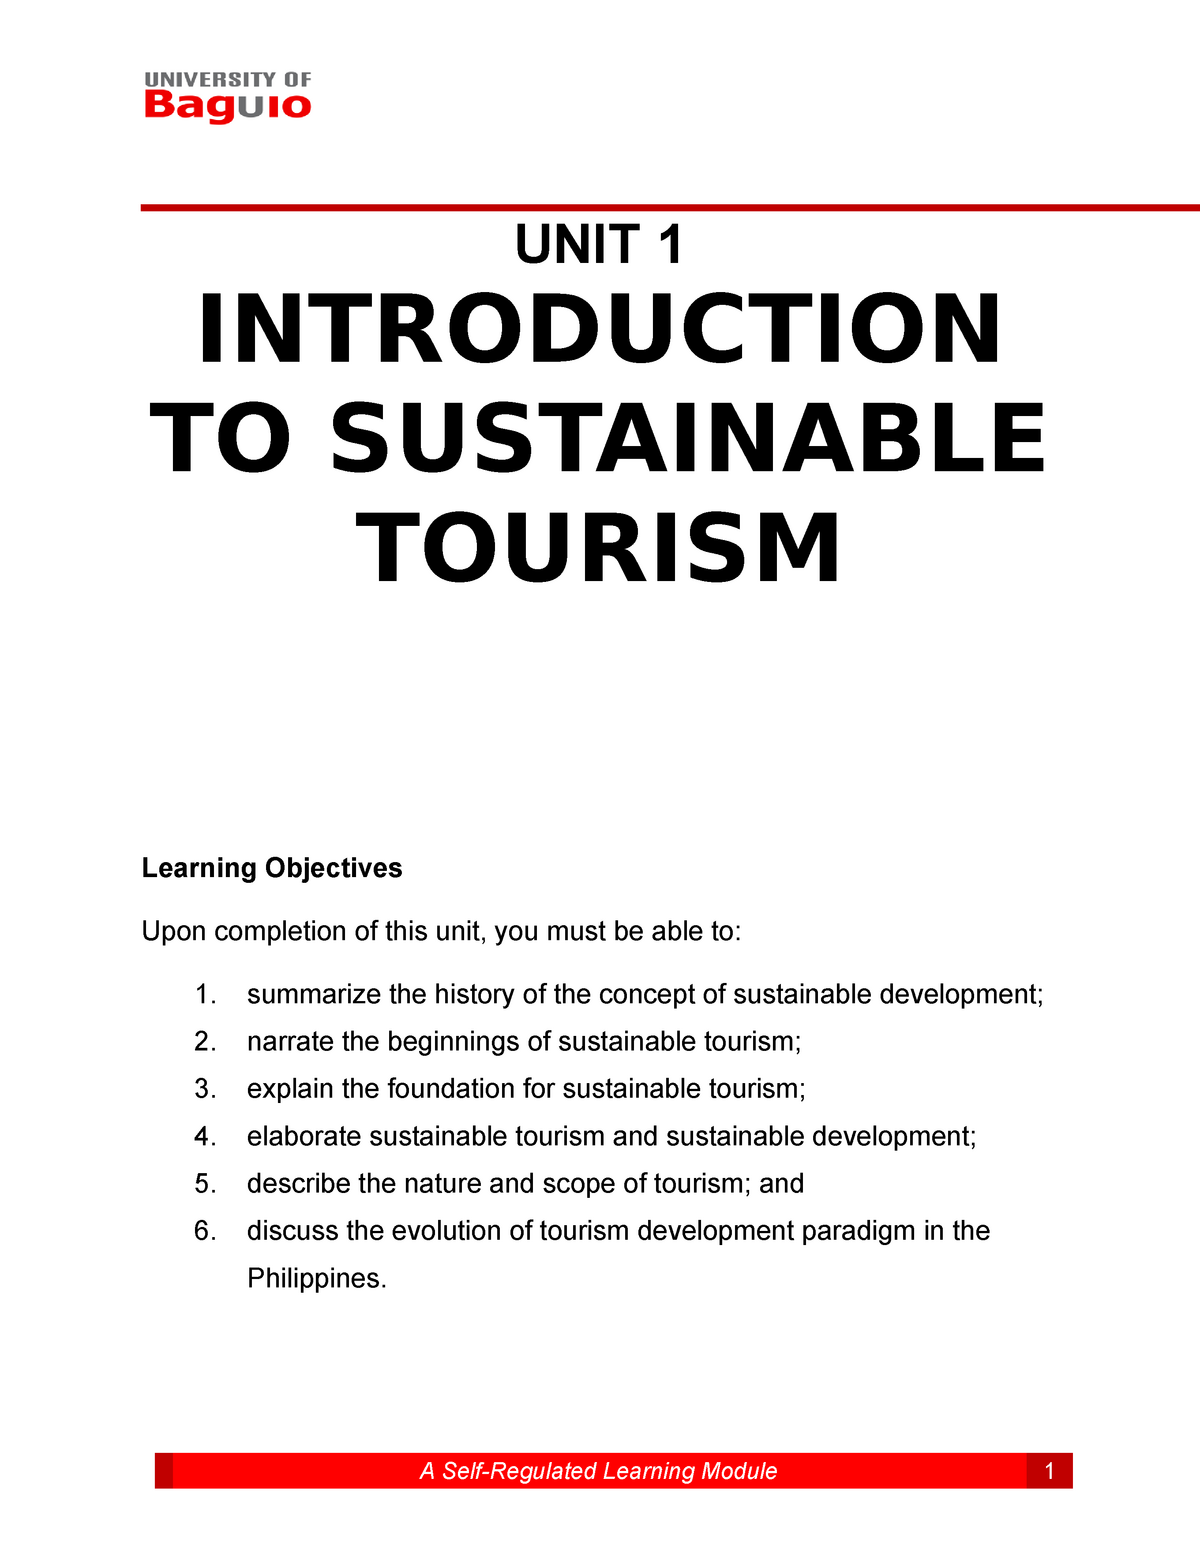 essay on sustainable tourism